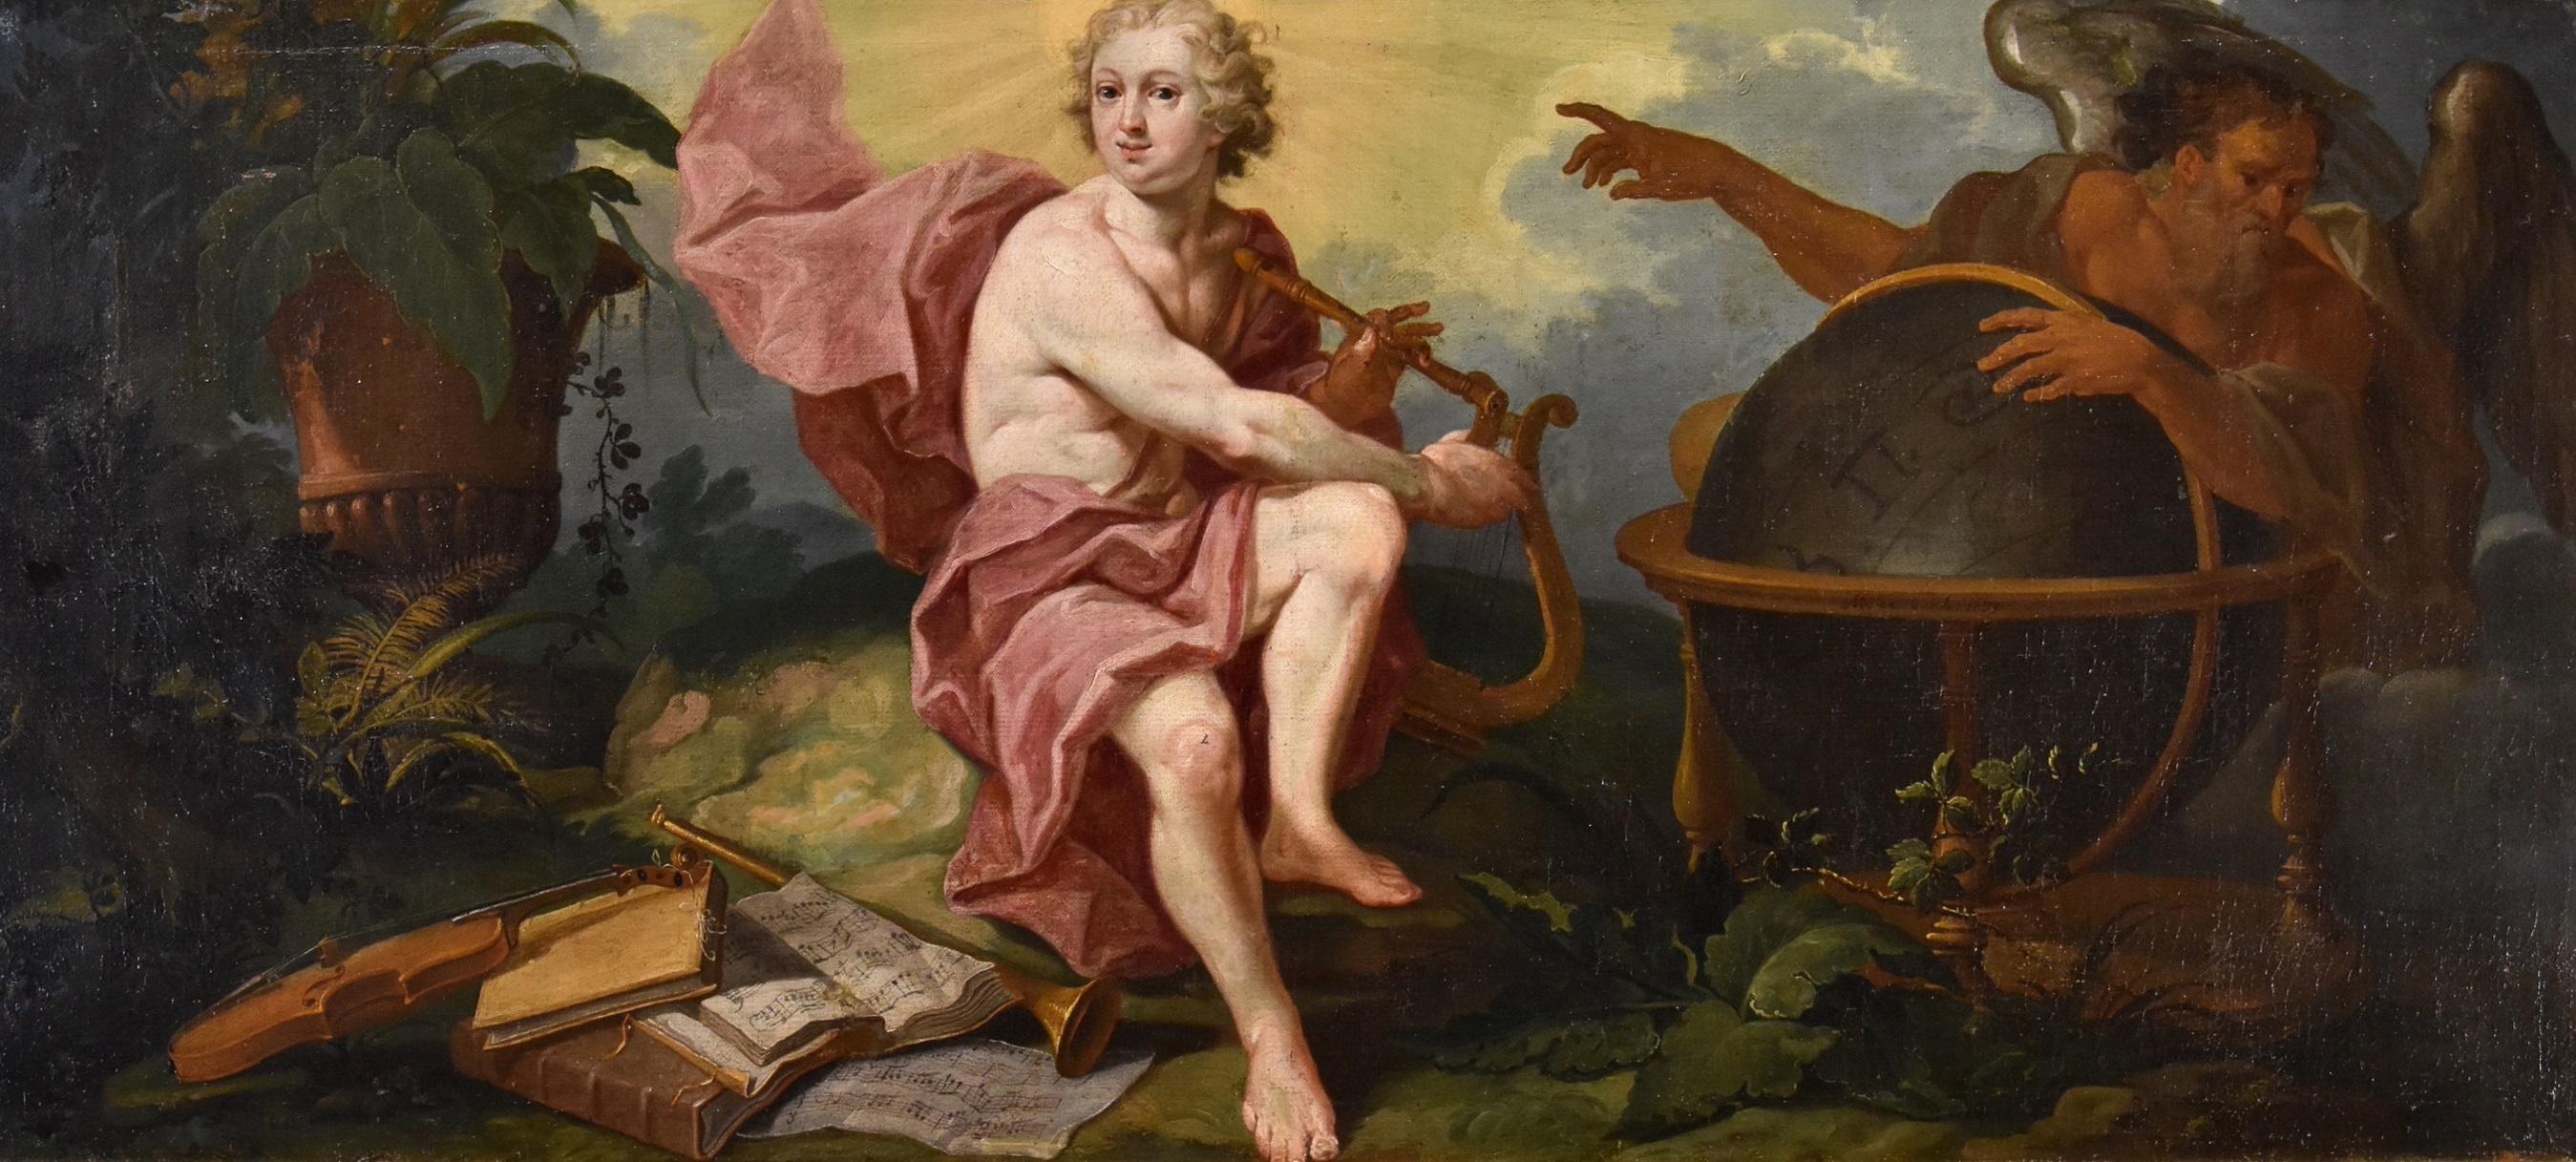 Allegory Triumph Of Art Over Time De Visch Paint 18th Century Oil on canvas Art 